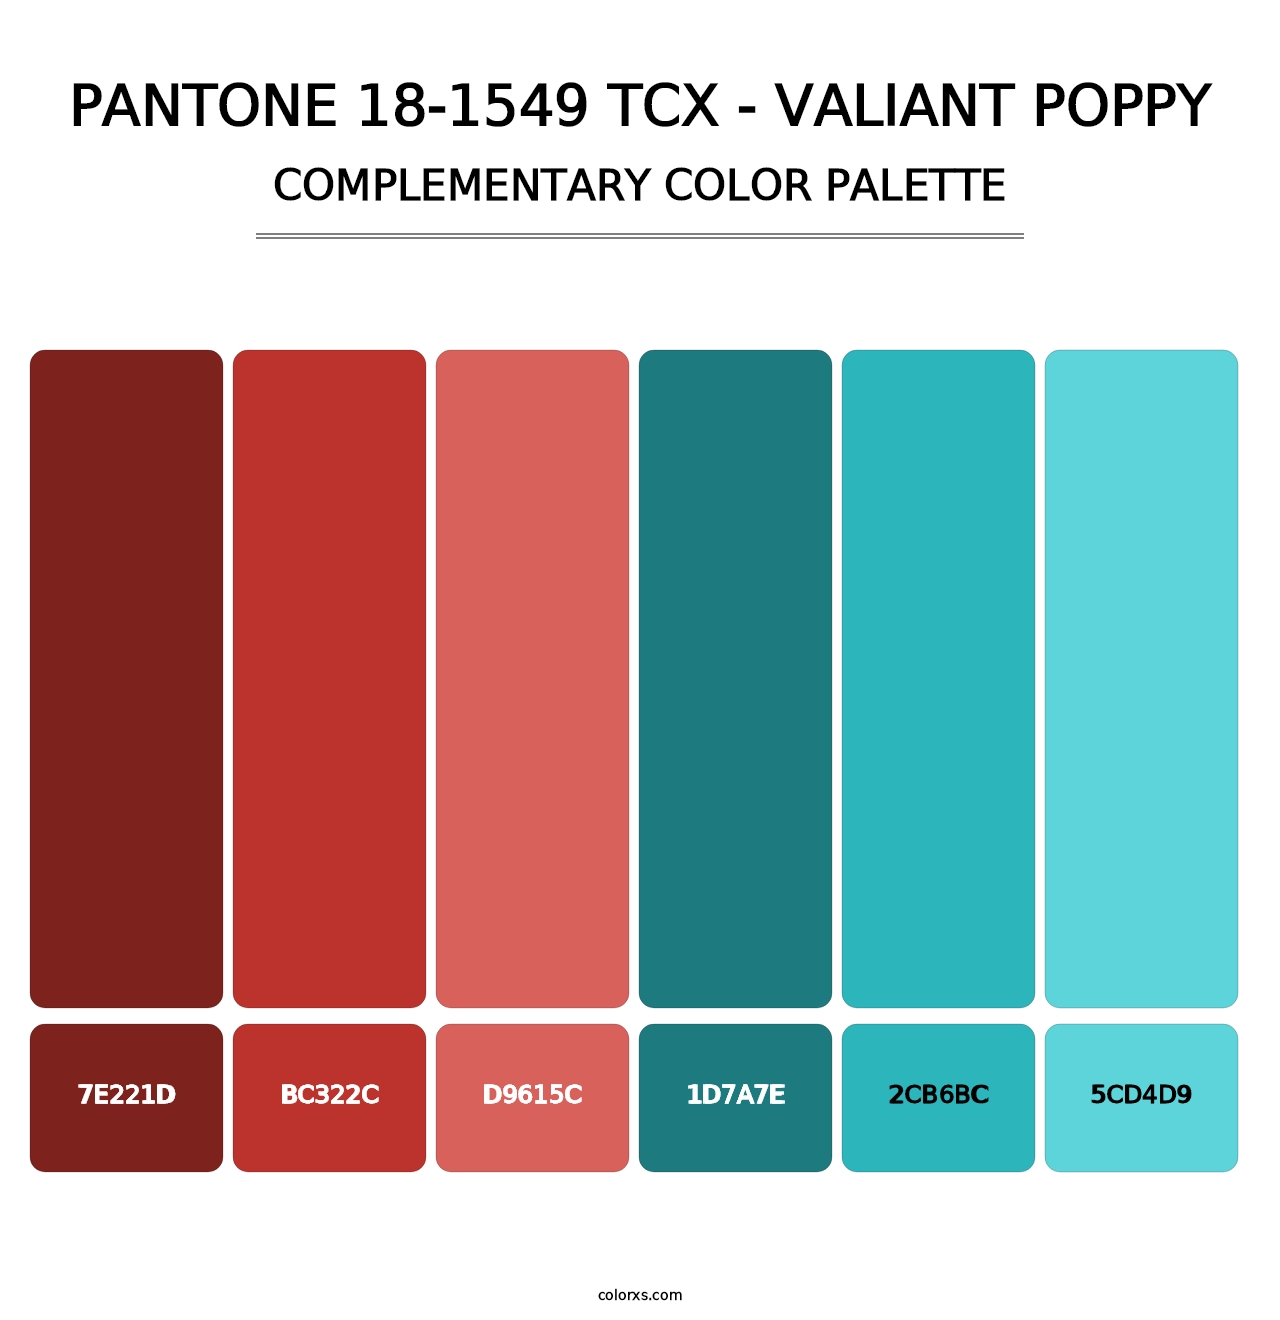 PANTONE 18-1549 TCX - Valiant Poppy - Complementary Color Palette